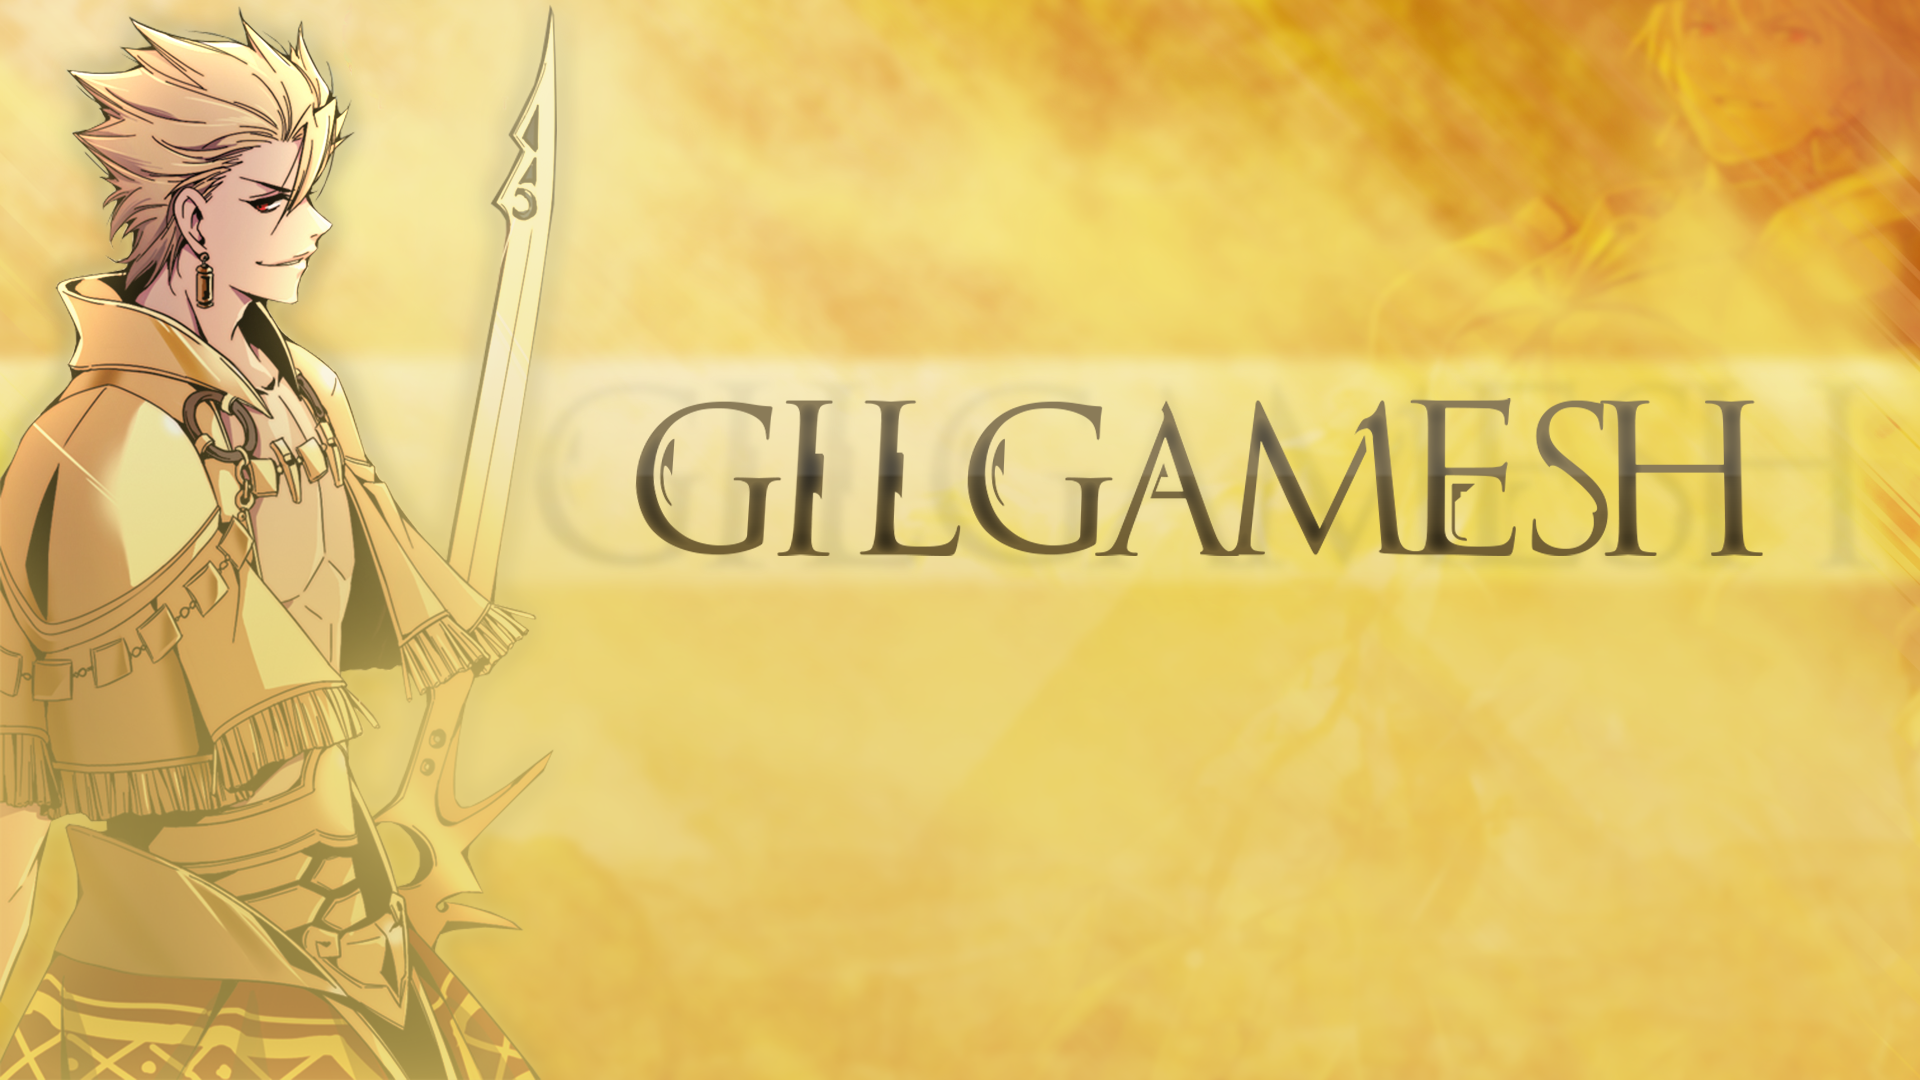 Gilgamesh with Sword by Chromha